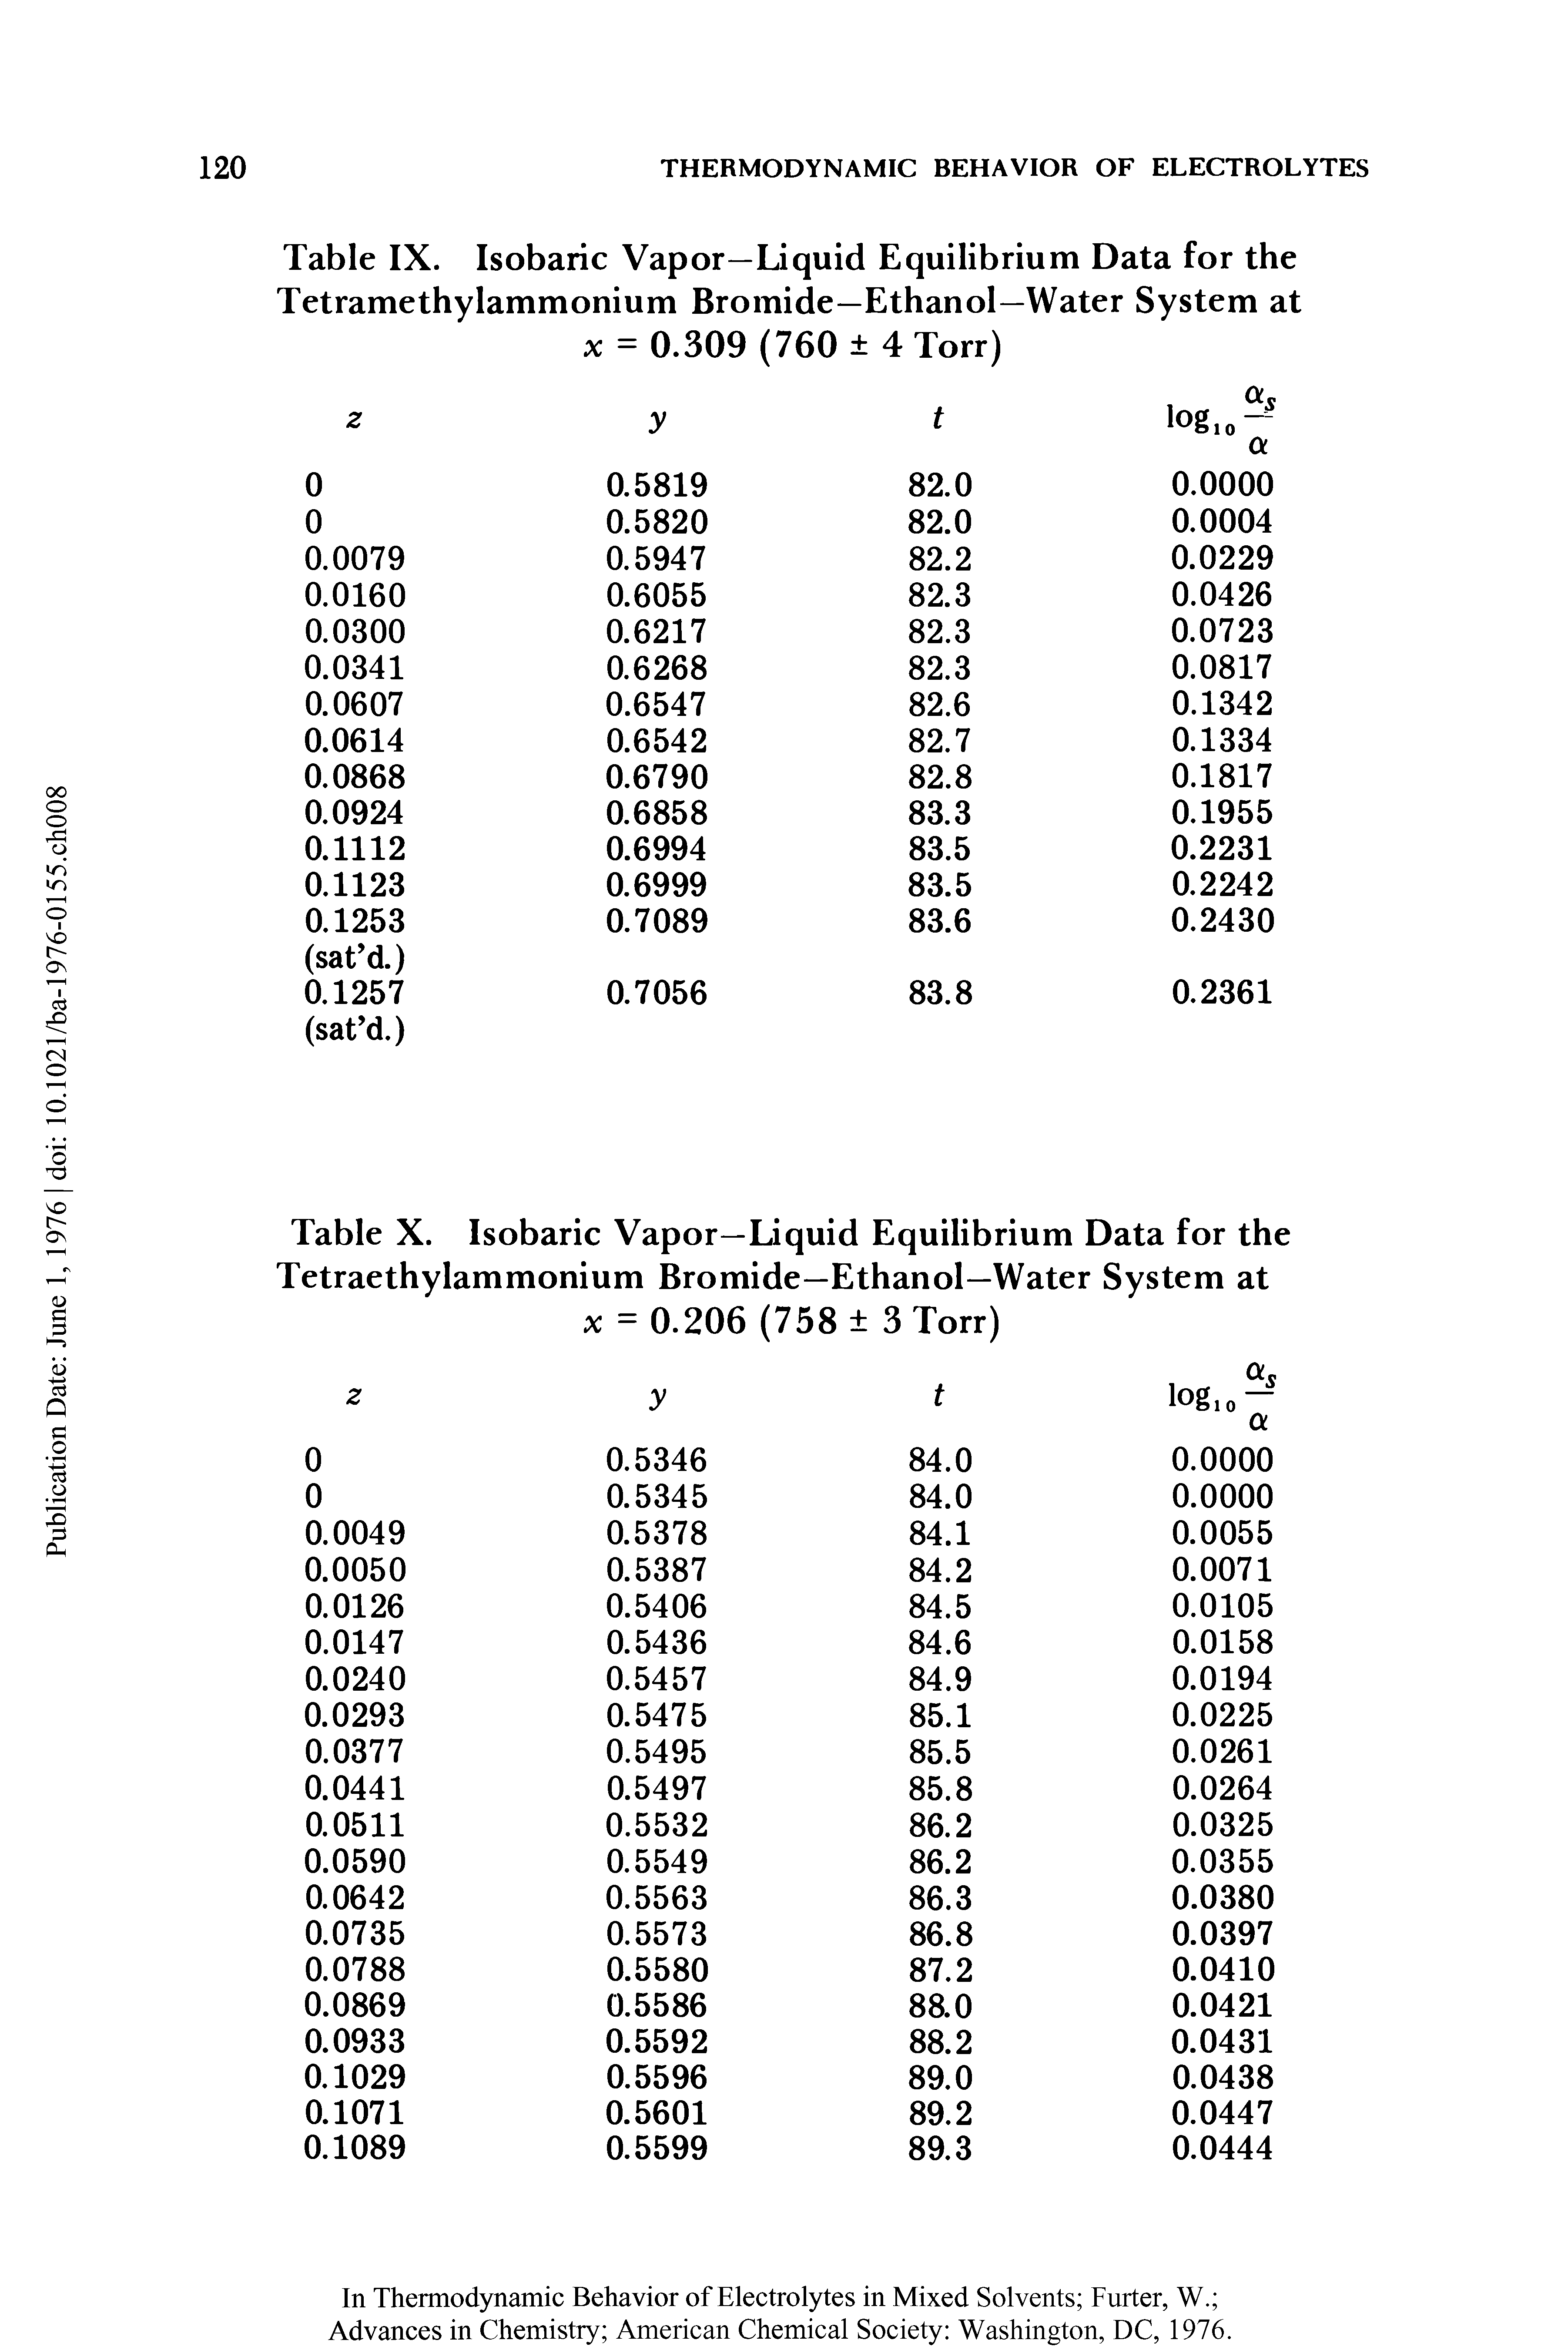 Table X. Isobaric Vapor—Liquid Equilibrium Data for the Tetraethylammonium Bromide—Ethanol—Water System at x = 0.206 (758 3 Torr)...